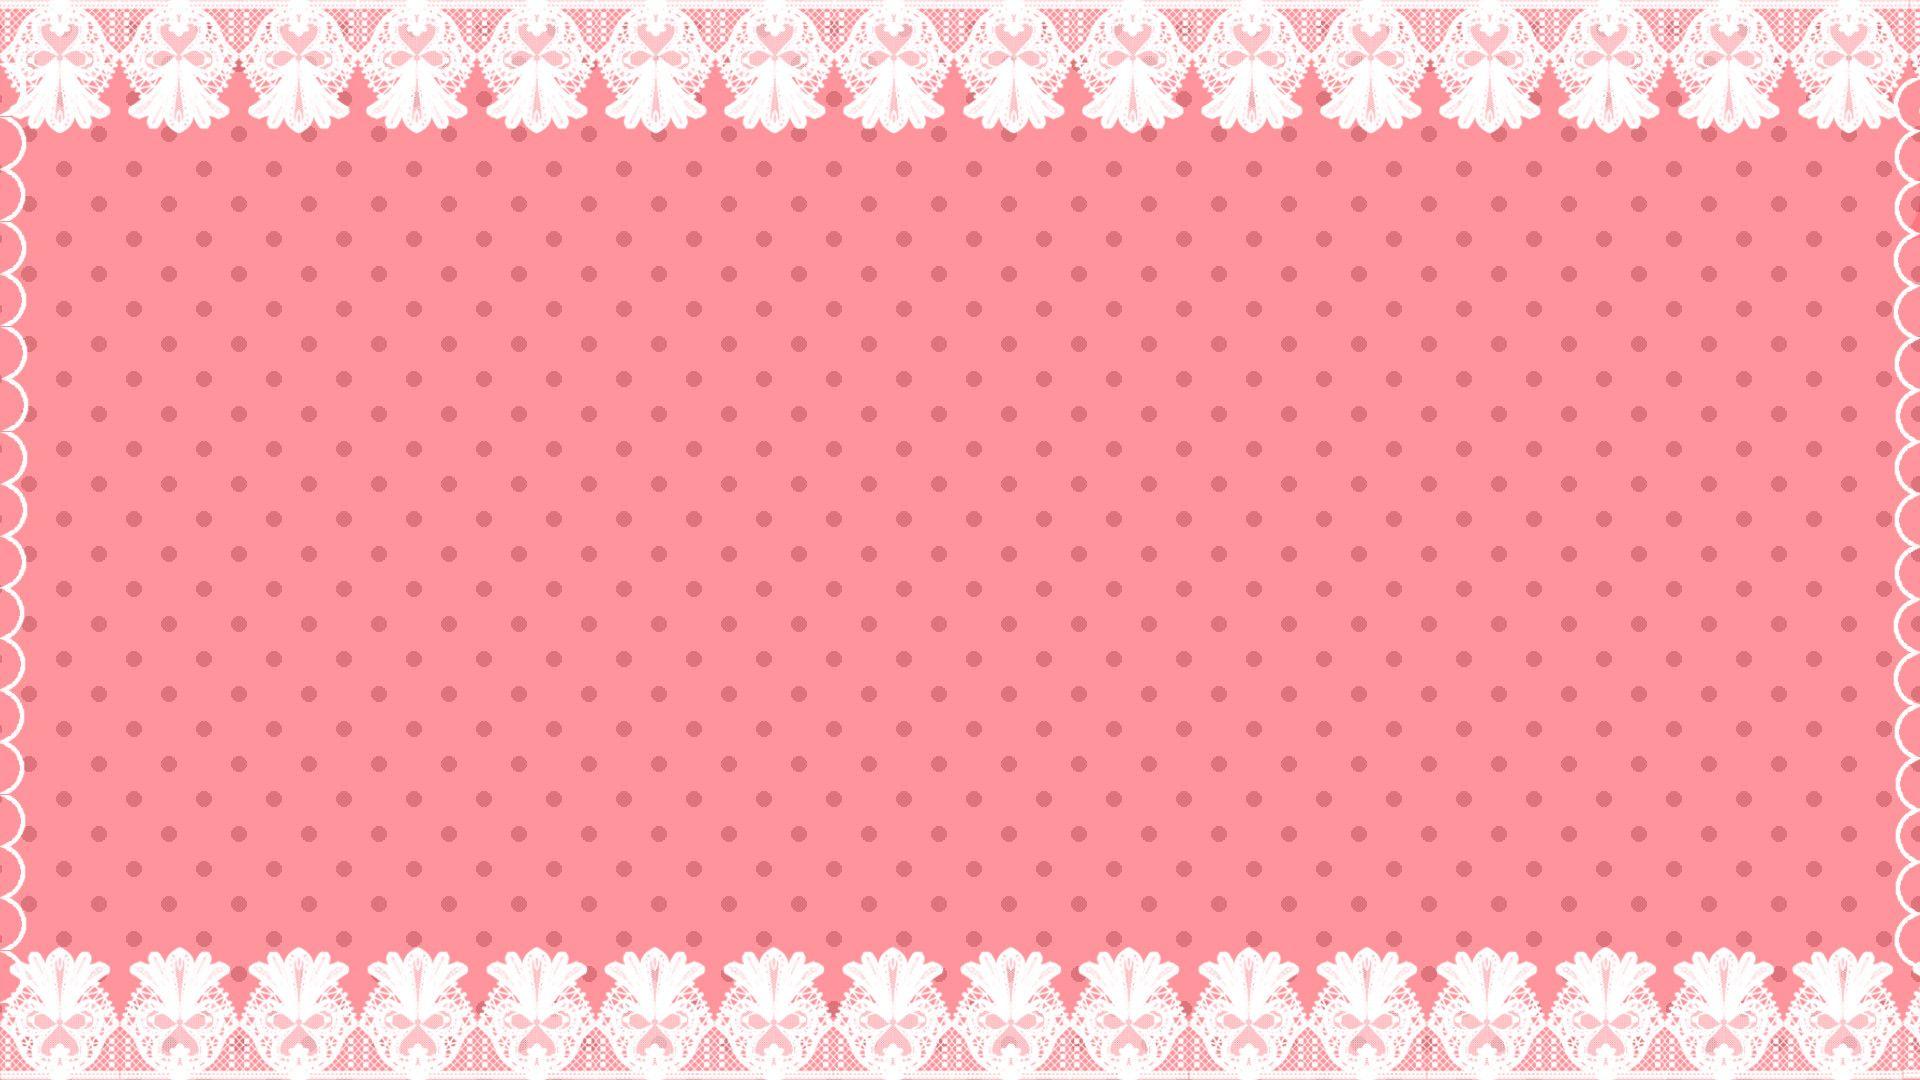 Pink Polka Dot Wallpaper. Gallery Of Pink Polka Dot Wallpaper